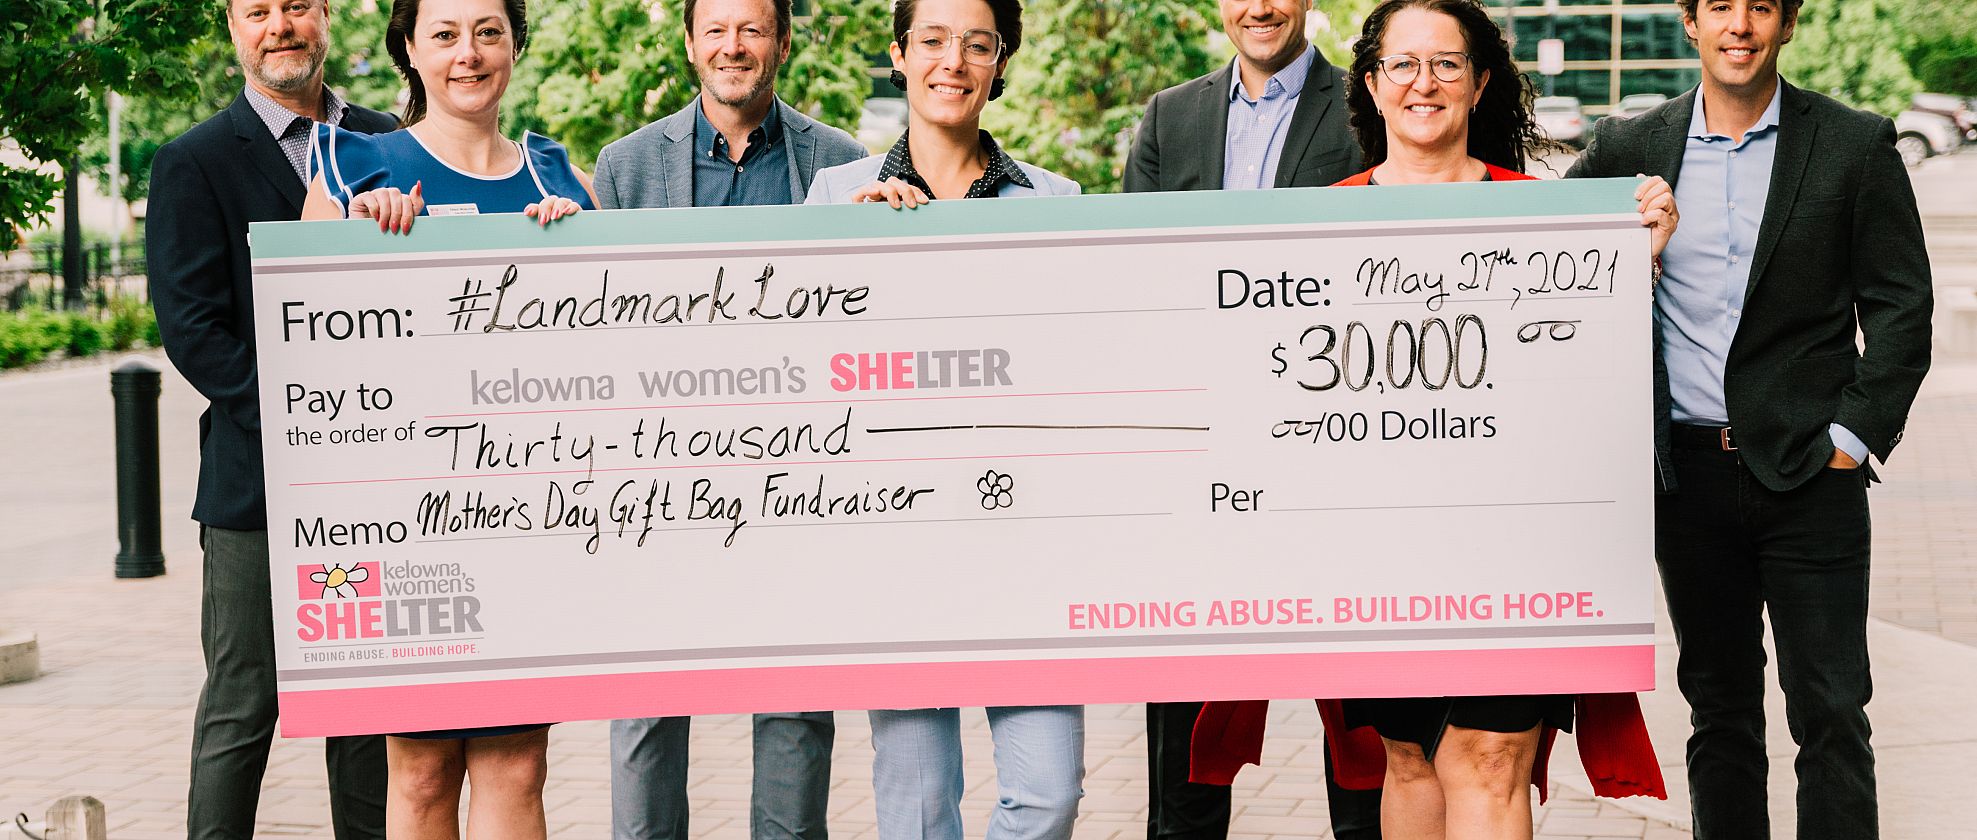 #LandmarkLove Mother’s Day Gift Tote fundraiser brings in $30K